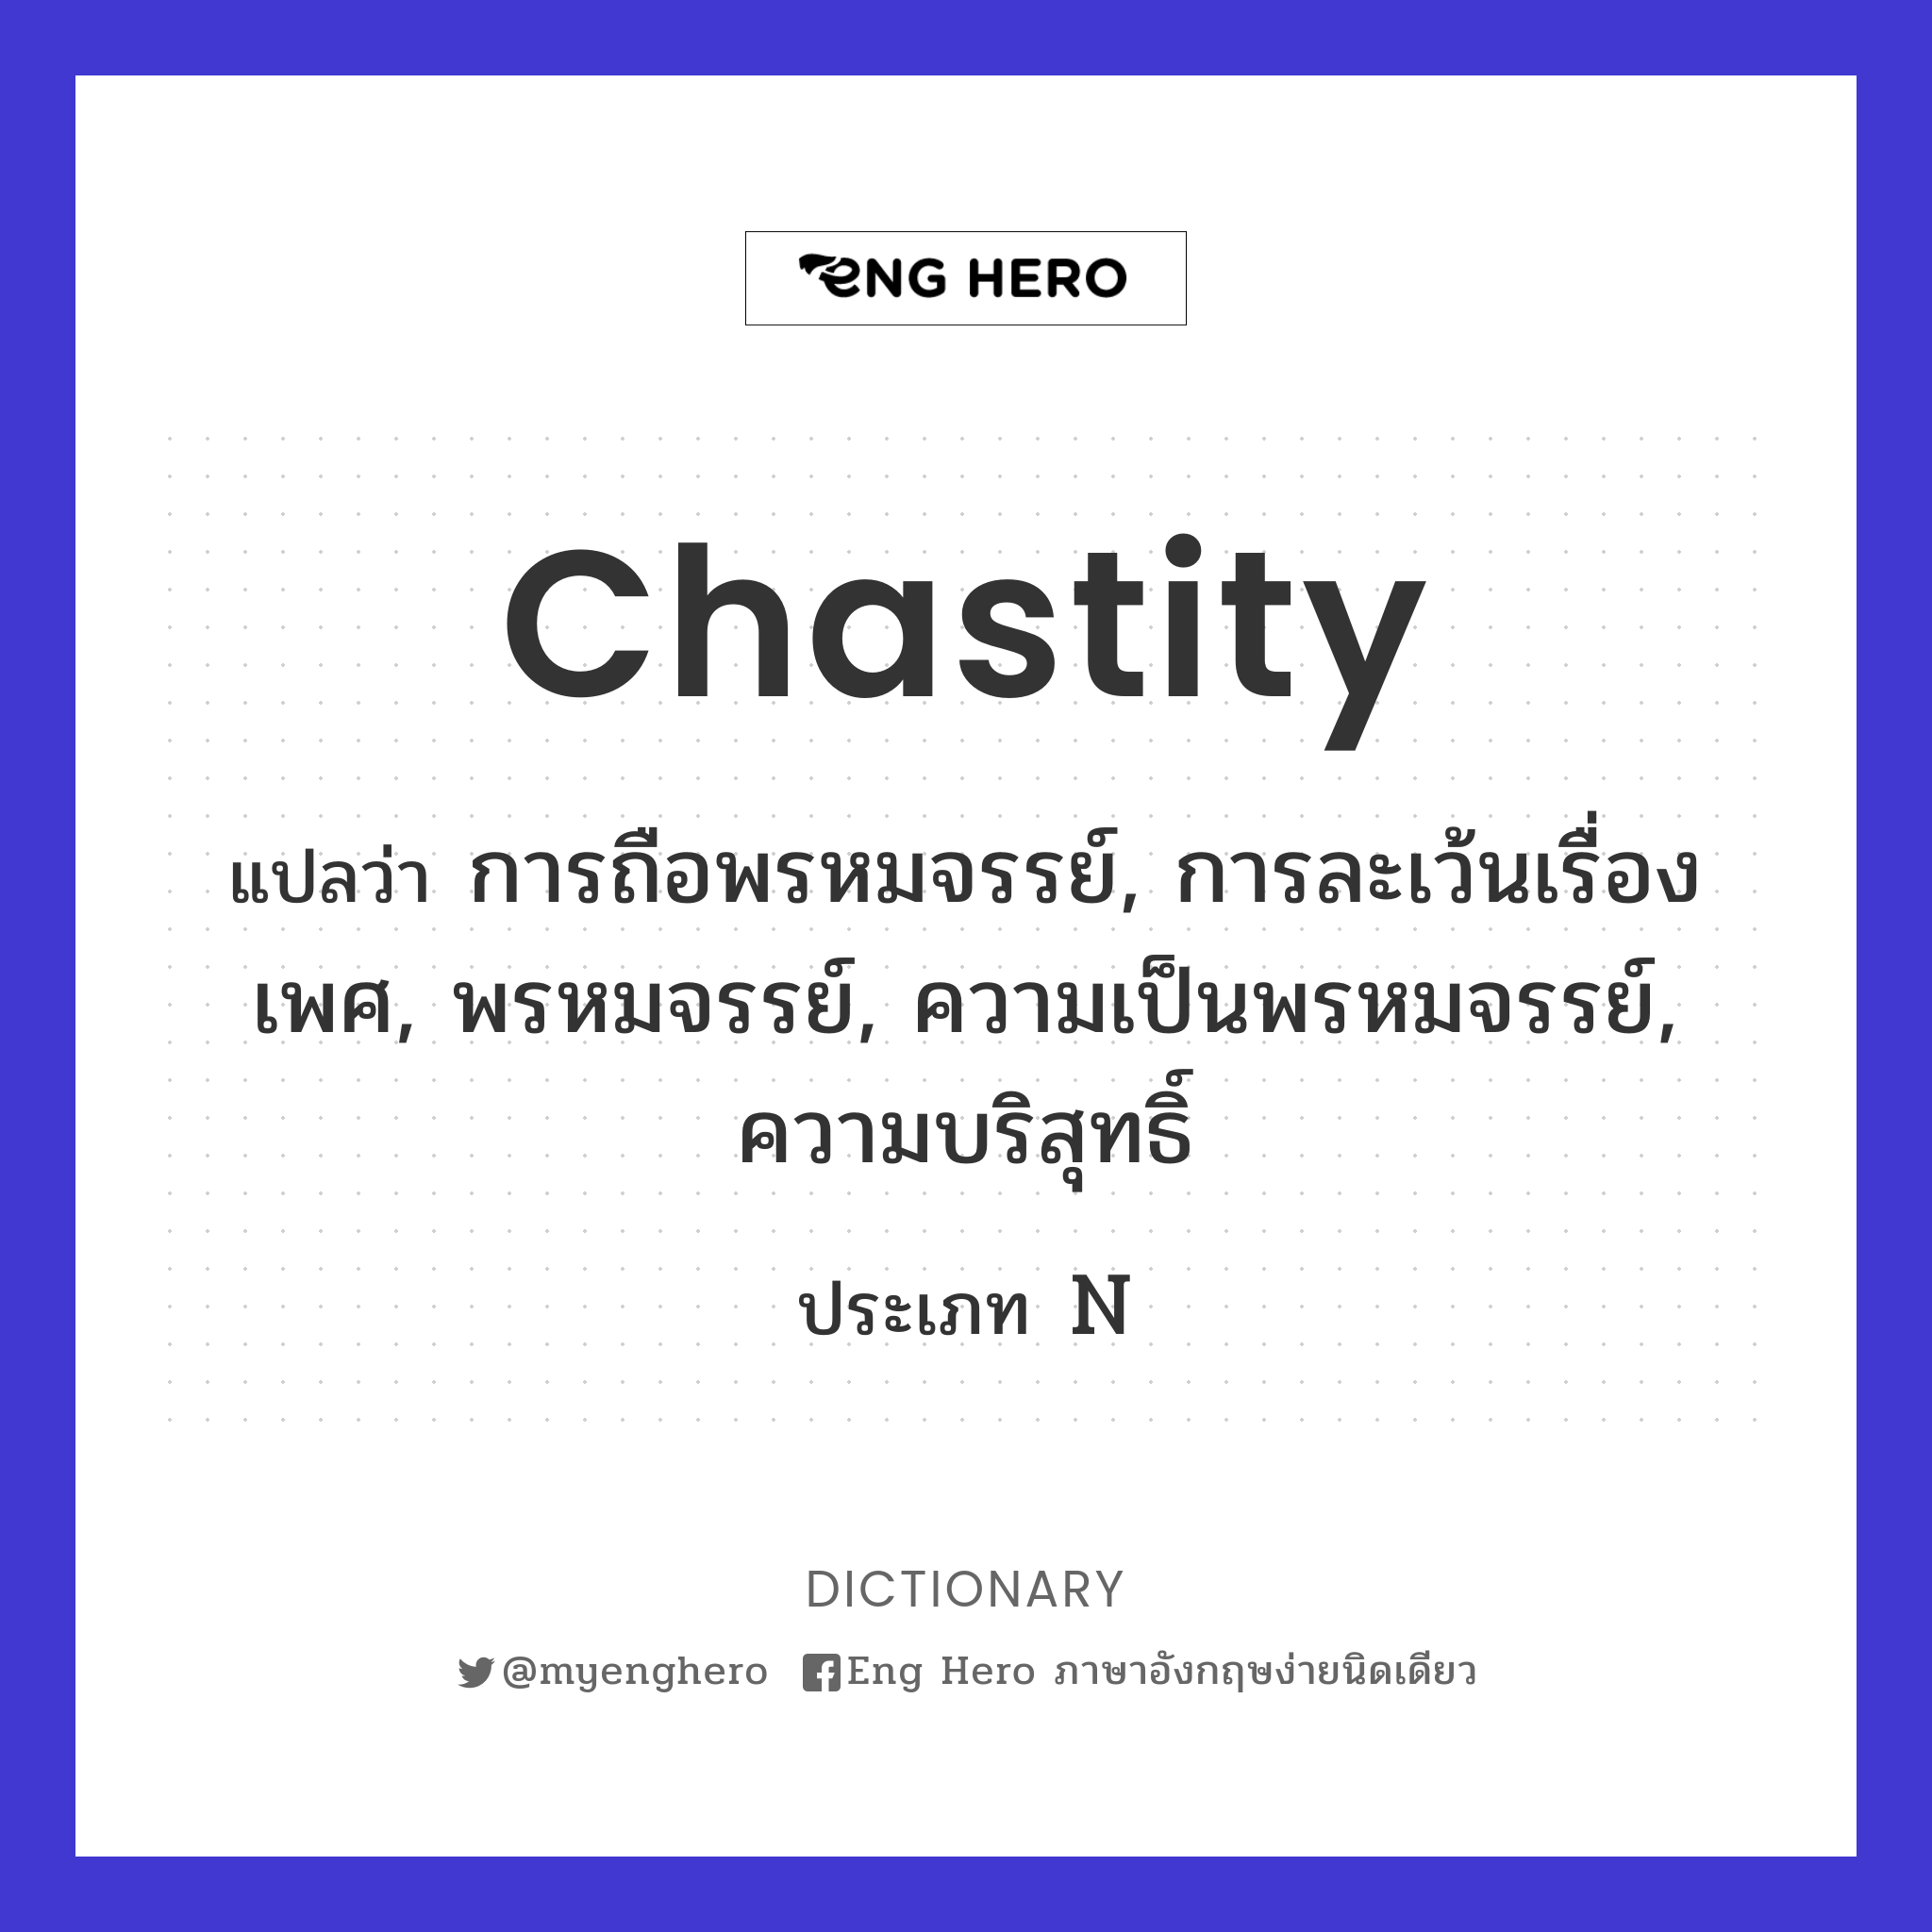 chastity